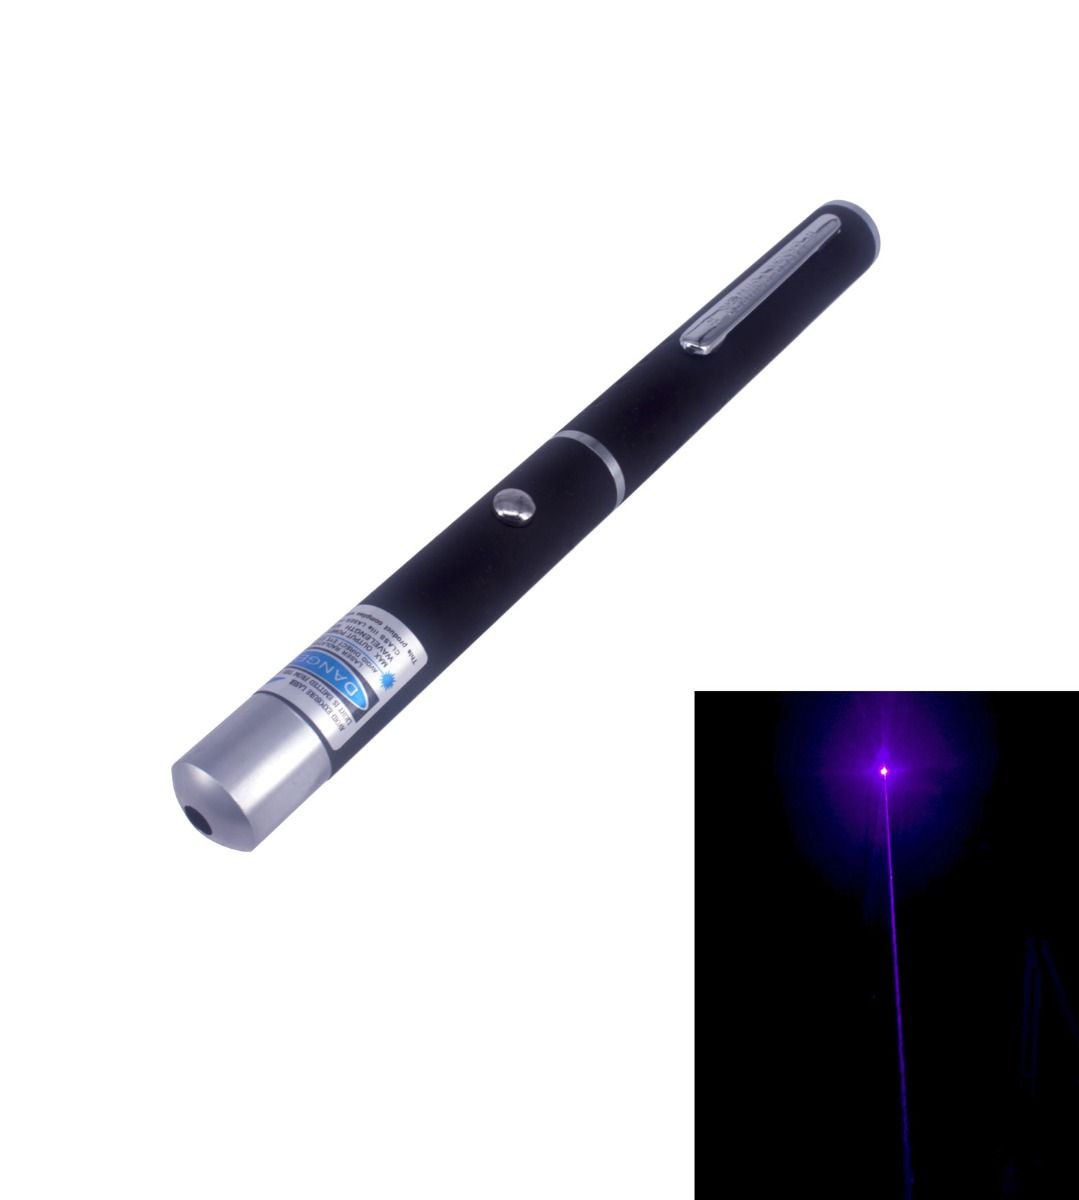 5mW 405nm Purple Blue Beam Light Visible Laser Pointers Blue Laser Pen Abundant 